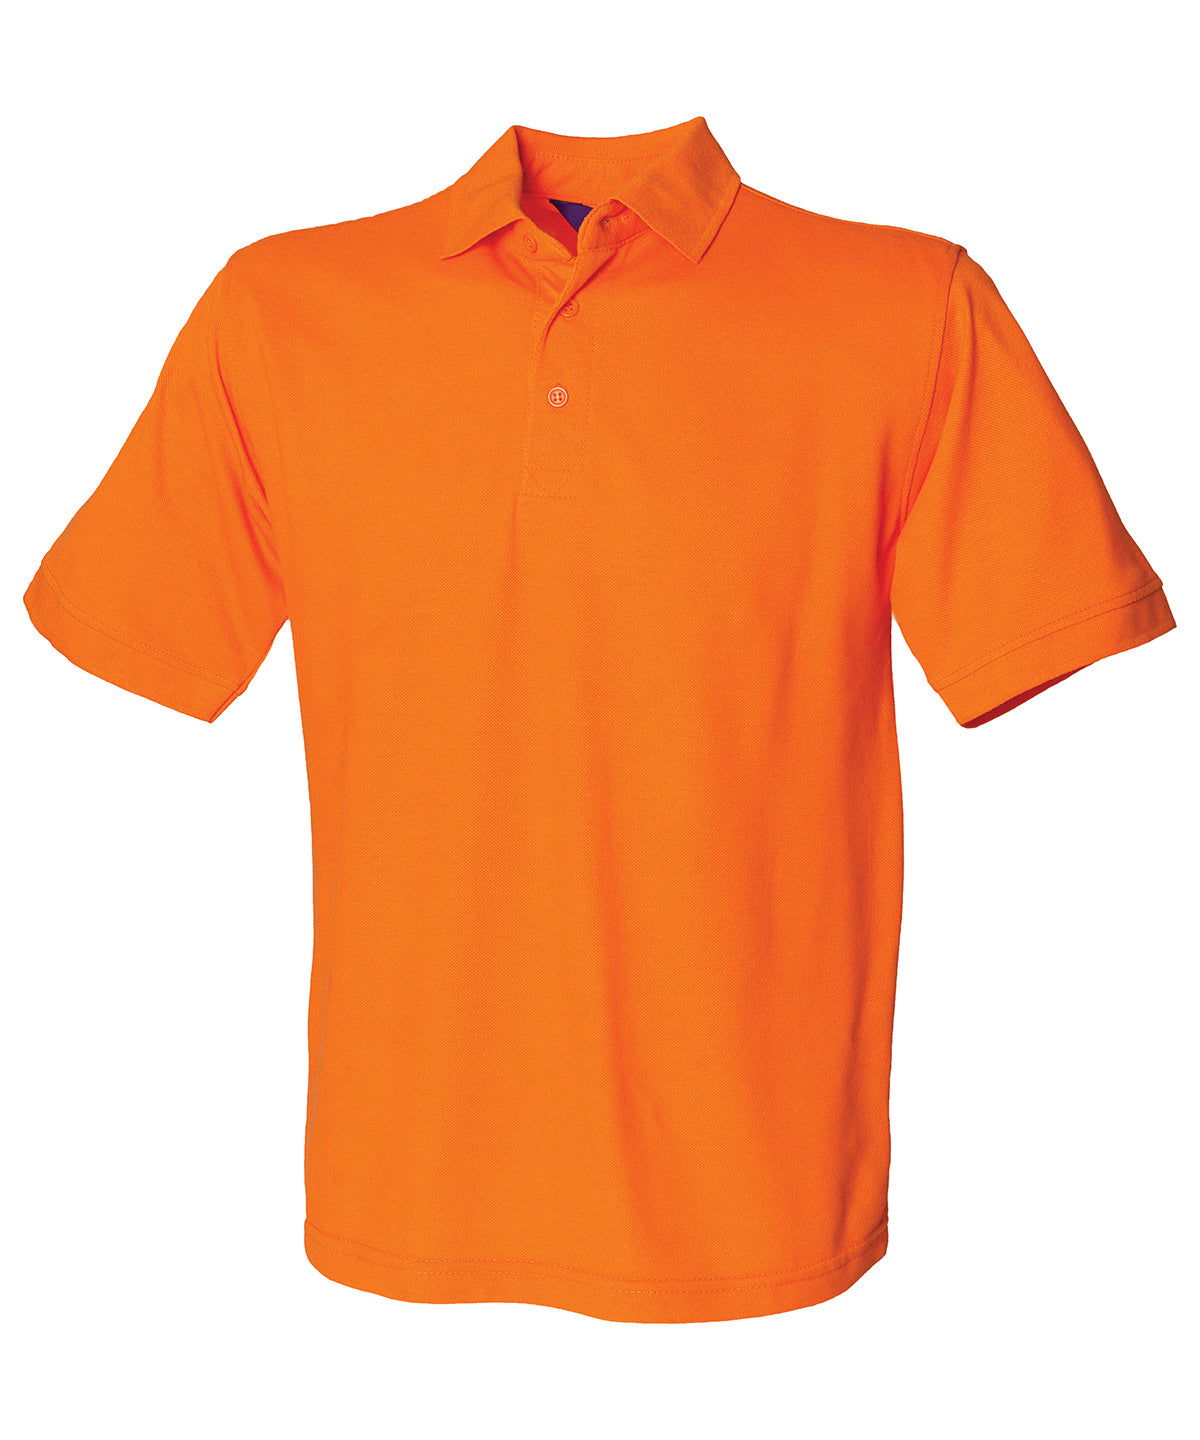 Personalised Polo Shirts - Lime Henbury 65/35 Classic piqué polo shirt